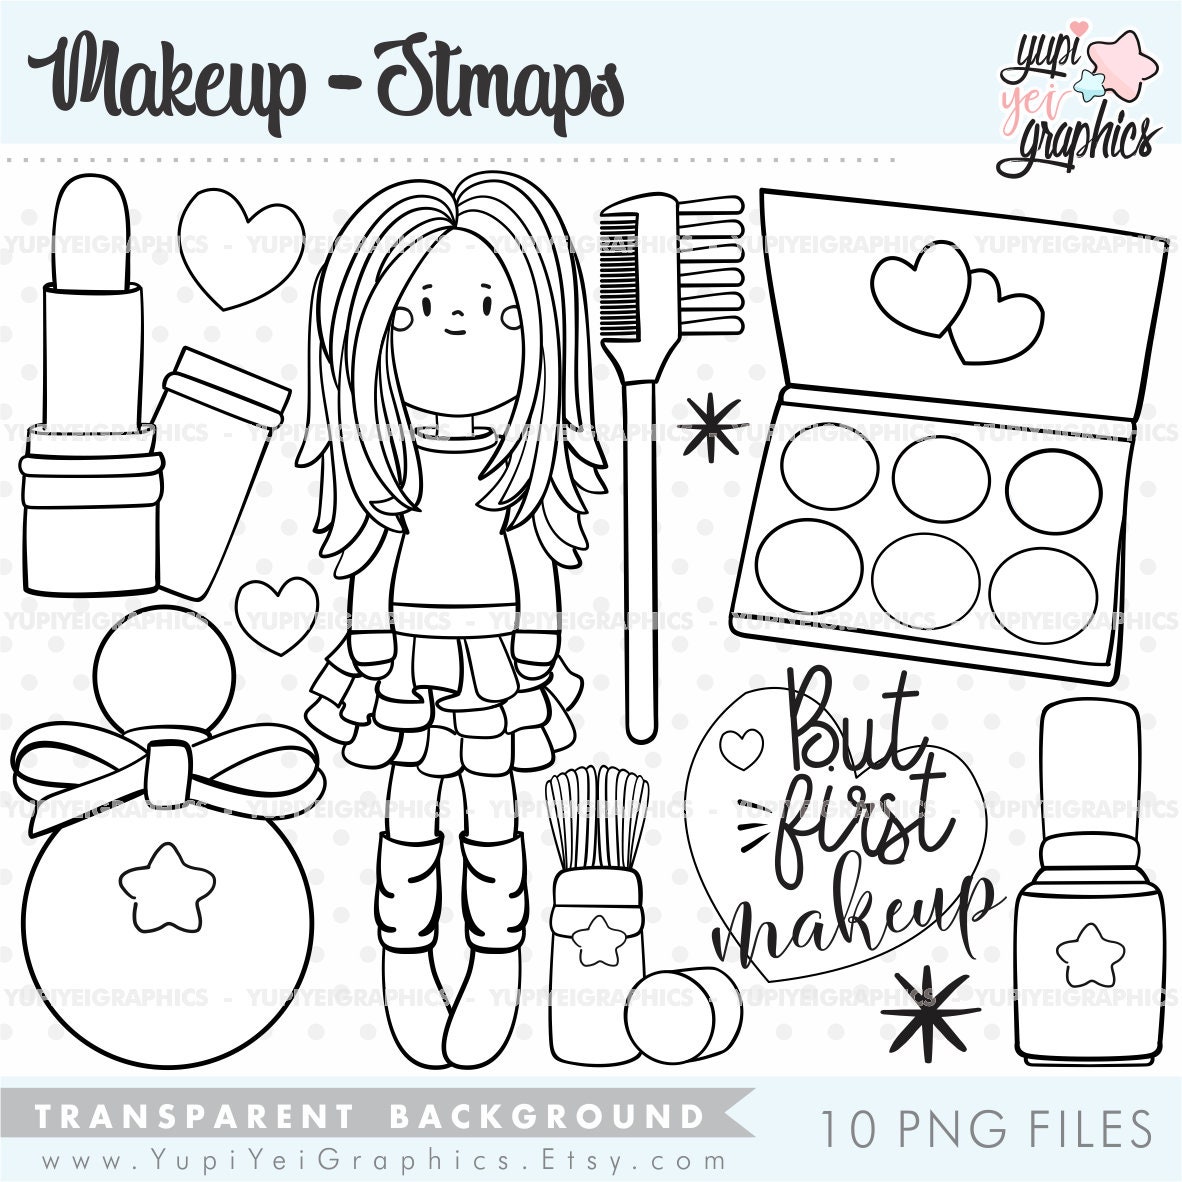 Makeup stamps makeup coloring pages mercial use makeup digistamps makeup party salon stamps nail polish stamps girl stamps stamps